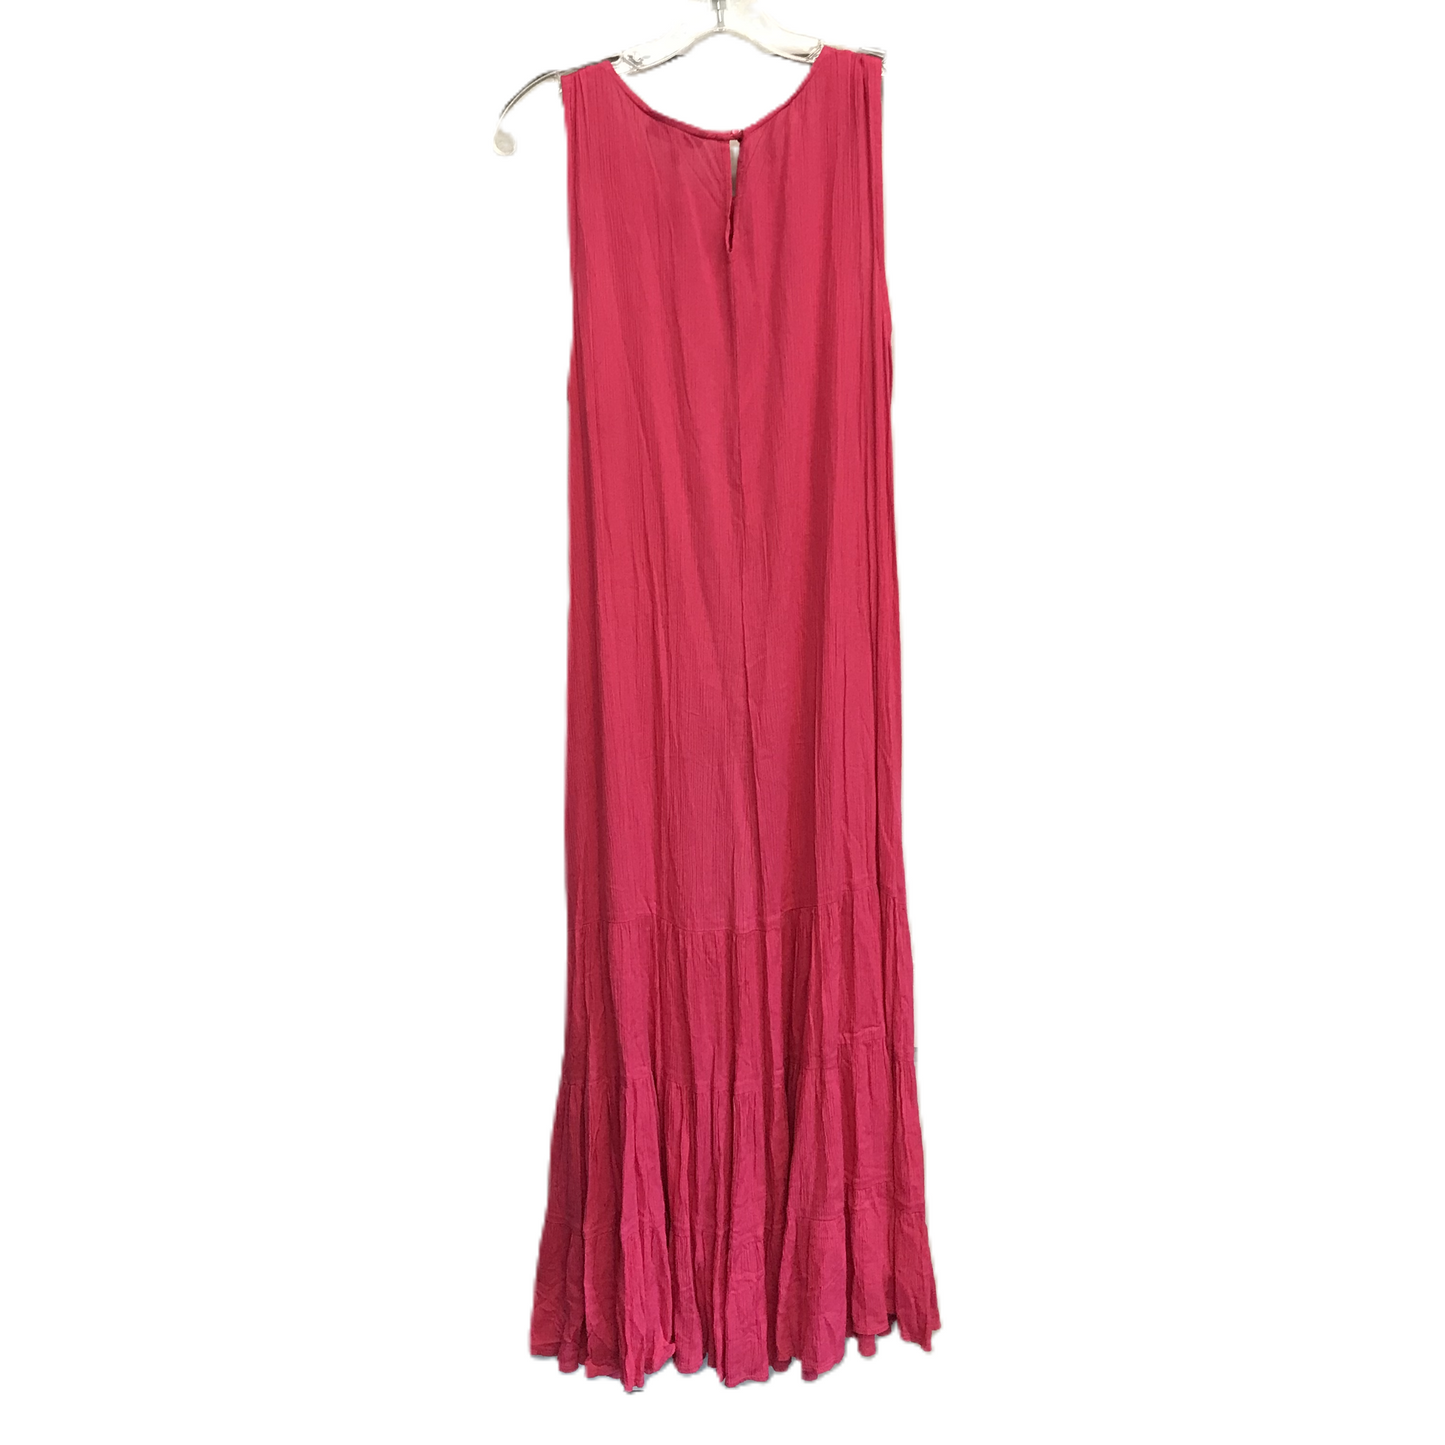 Pink Dress Casual Maxi By Jbs, Size: 2x